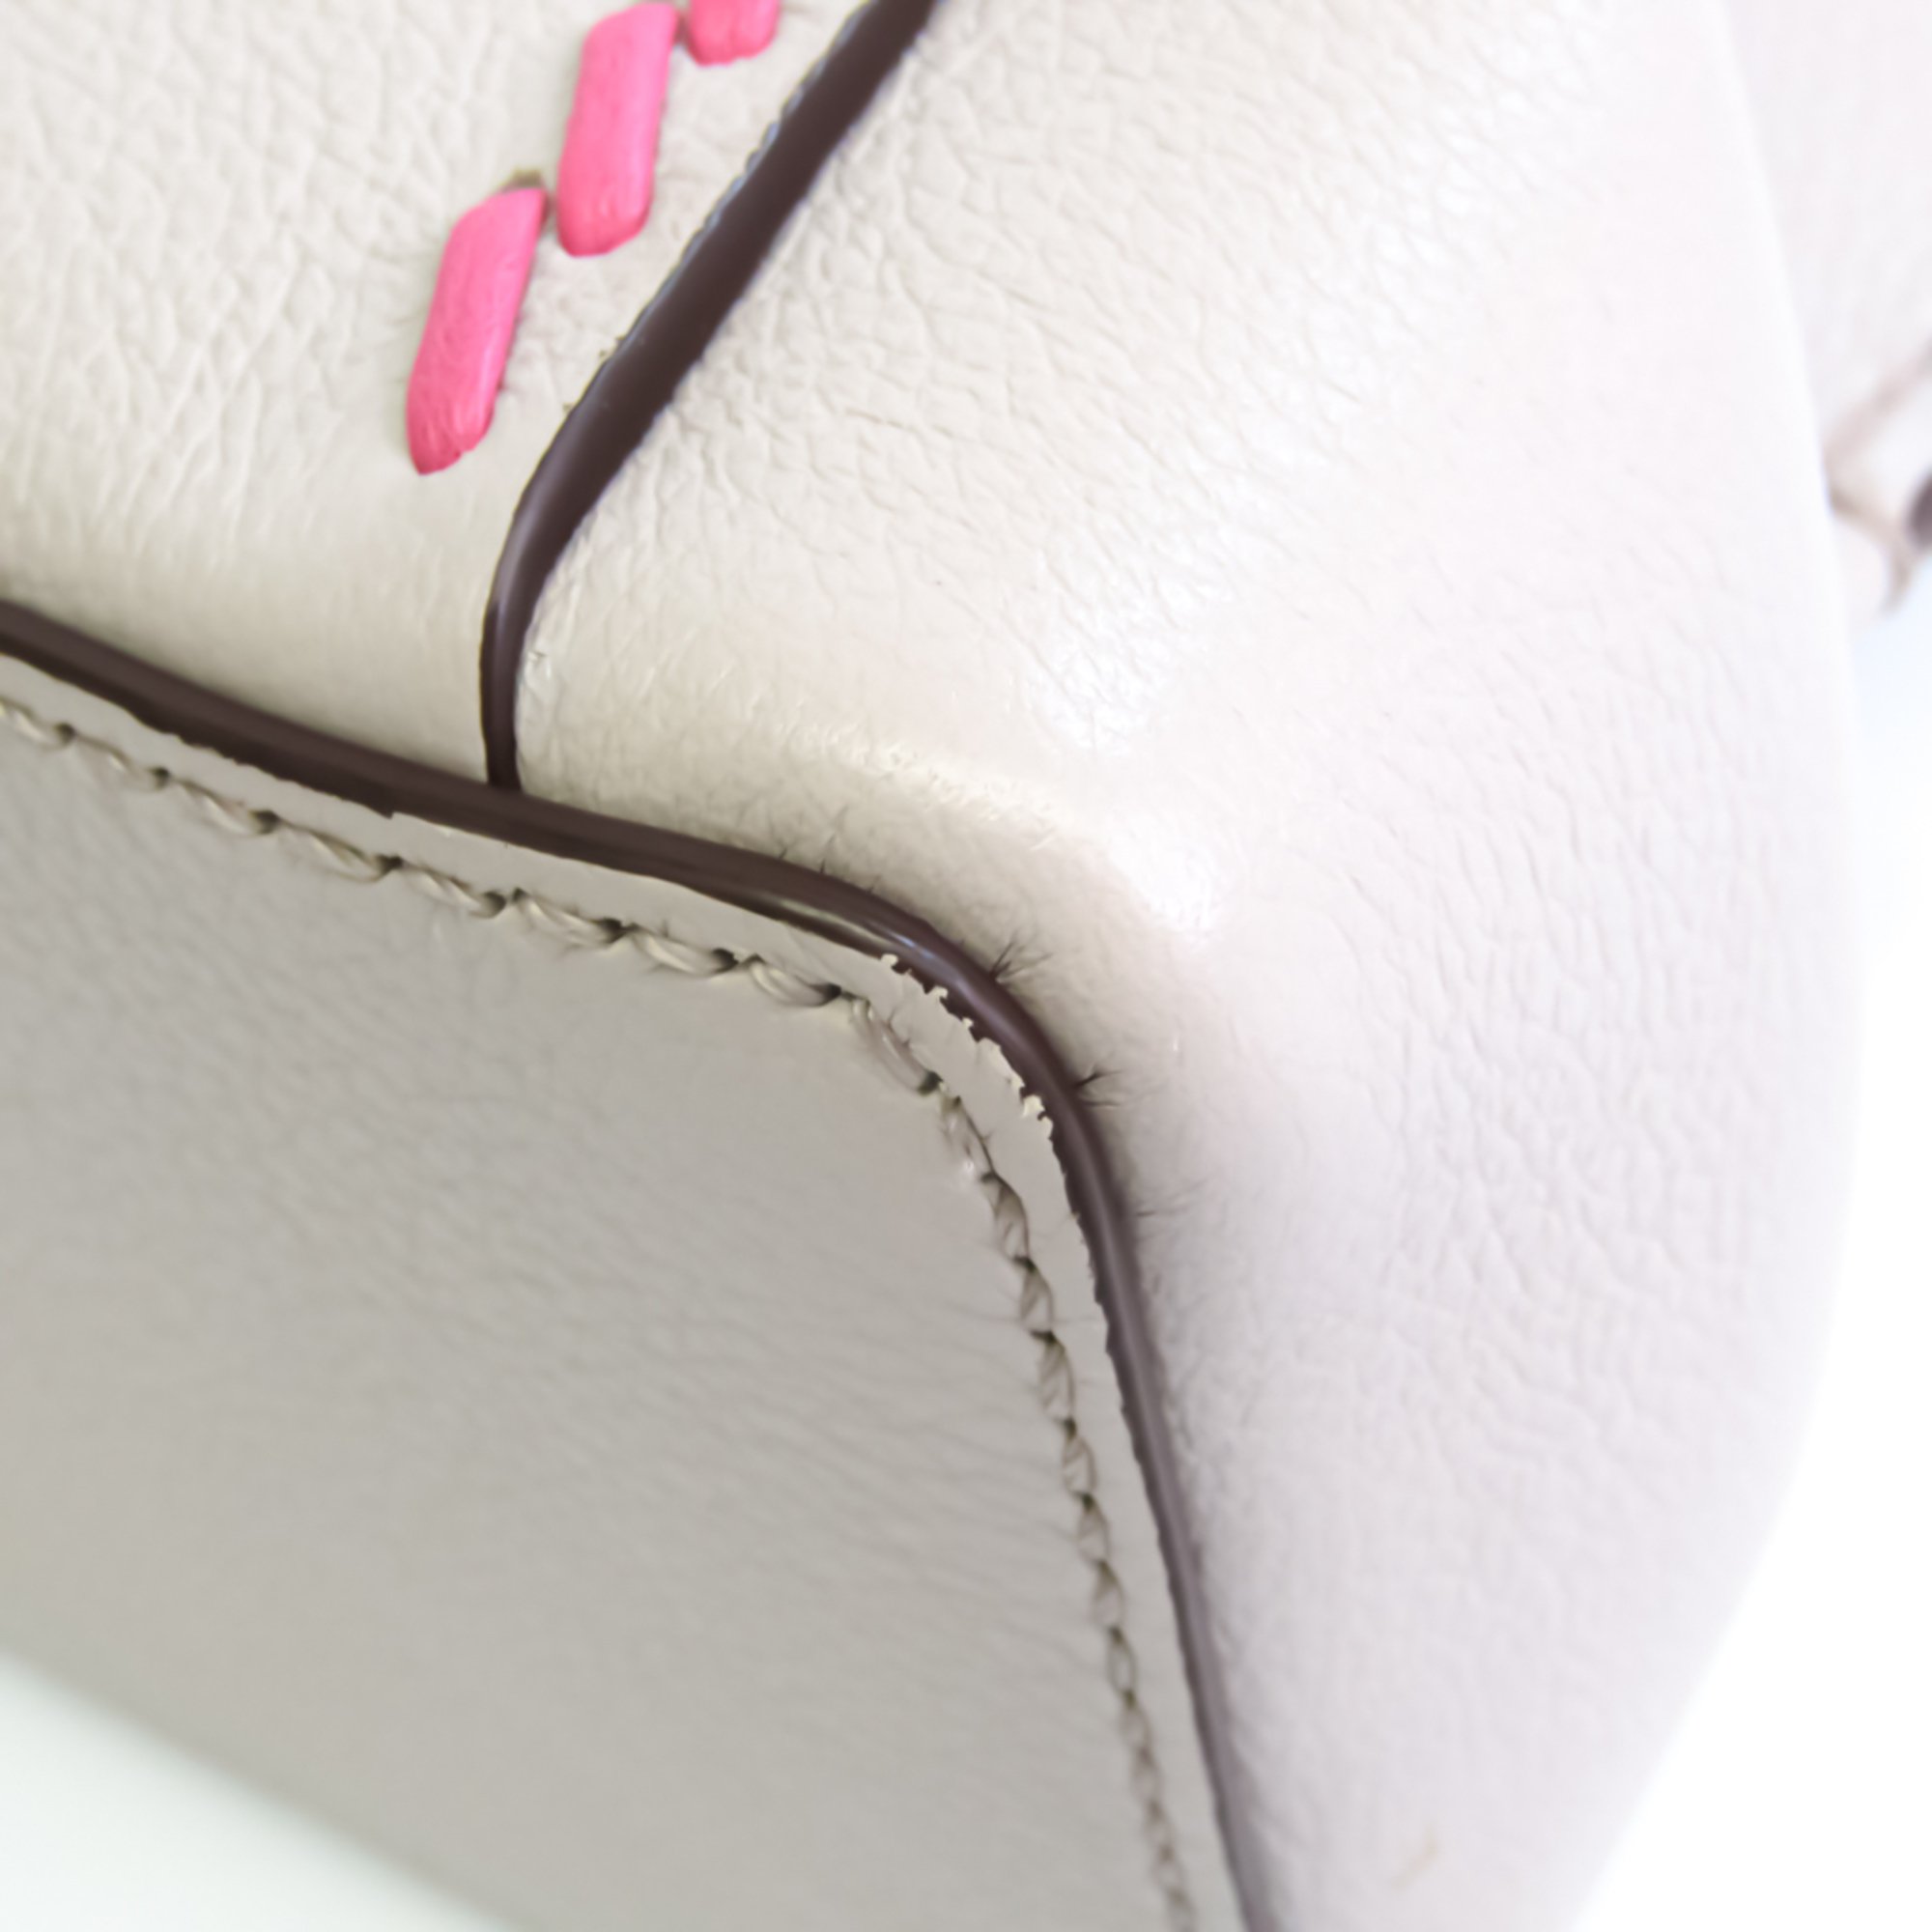 Cartier C De Cartier Mini Model L1002070 Women's Leather Handbag,Shoulder Bag Light Gray,Pink